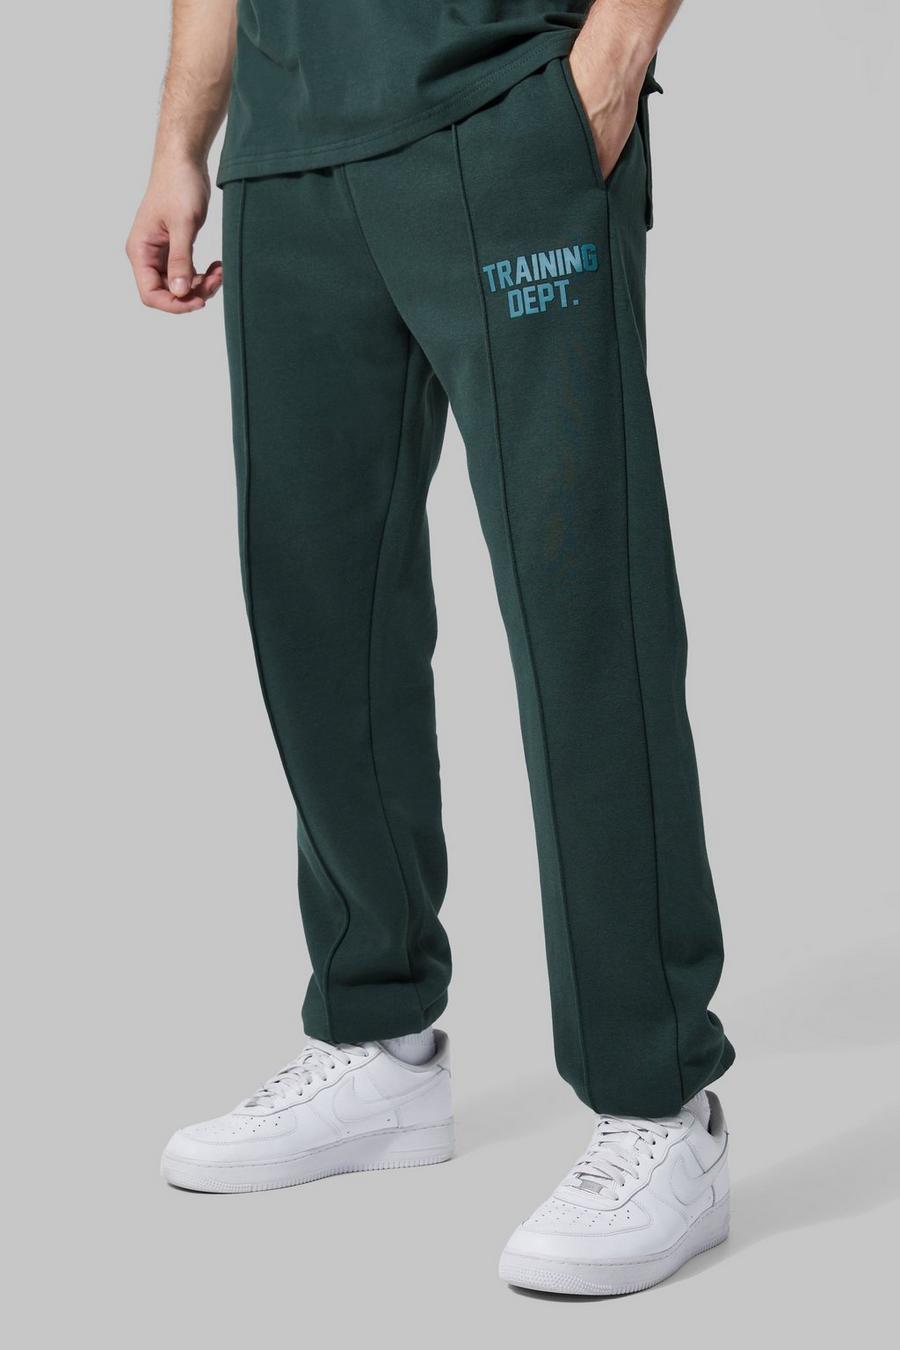 Pantalón deportivo Tall Active ajustado, Dark green